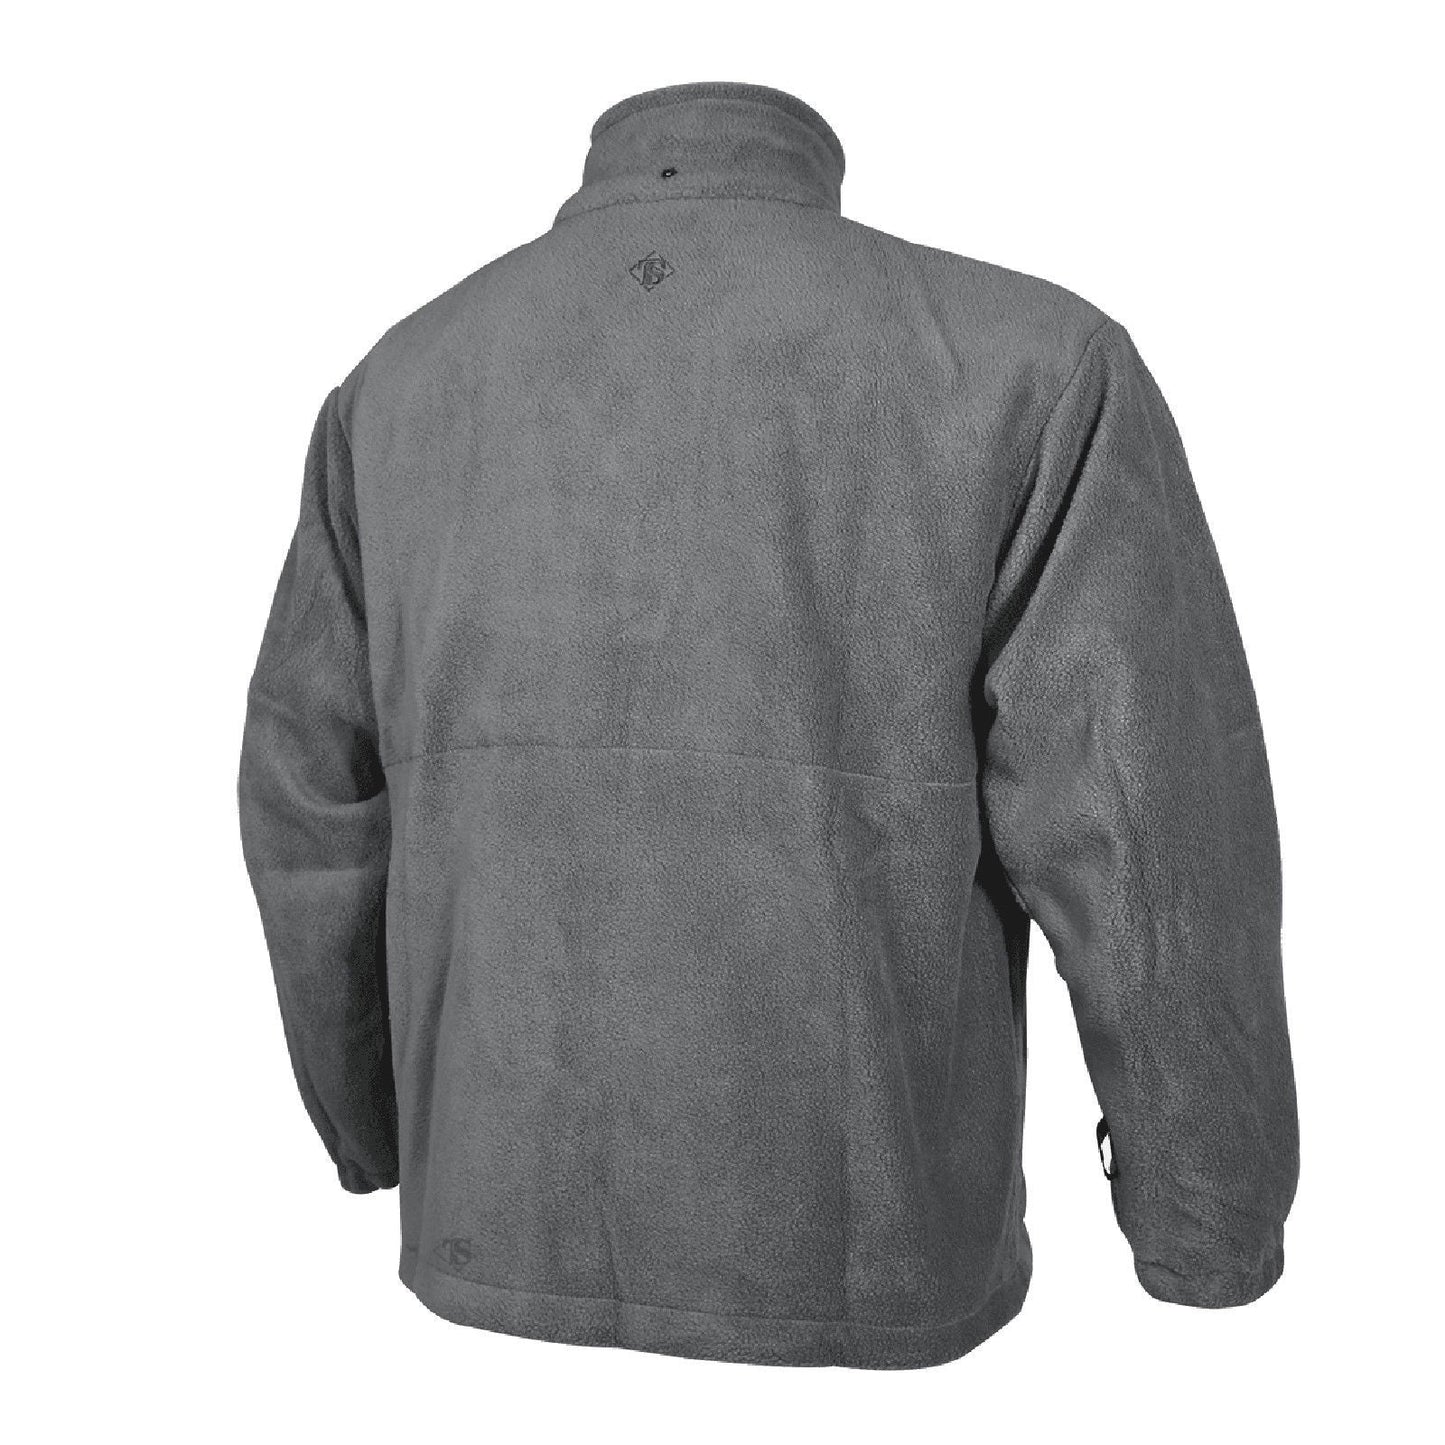 Tru-Spec Polar Fleece Jacket - 100% Polyester Microfleece